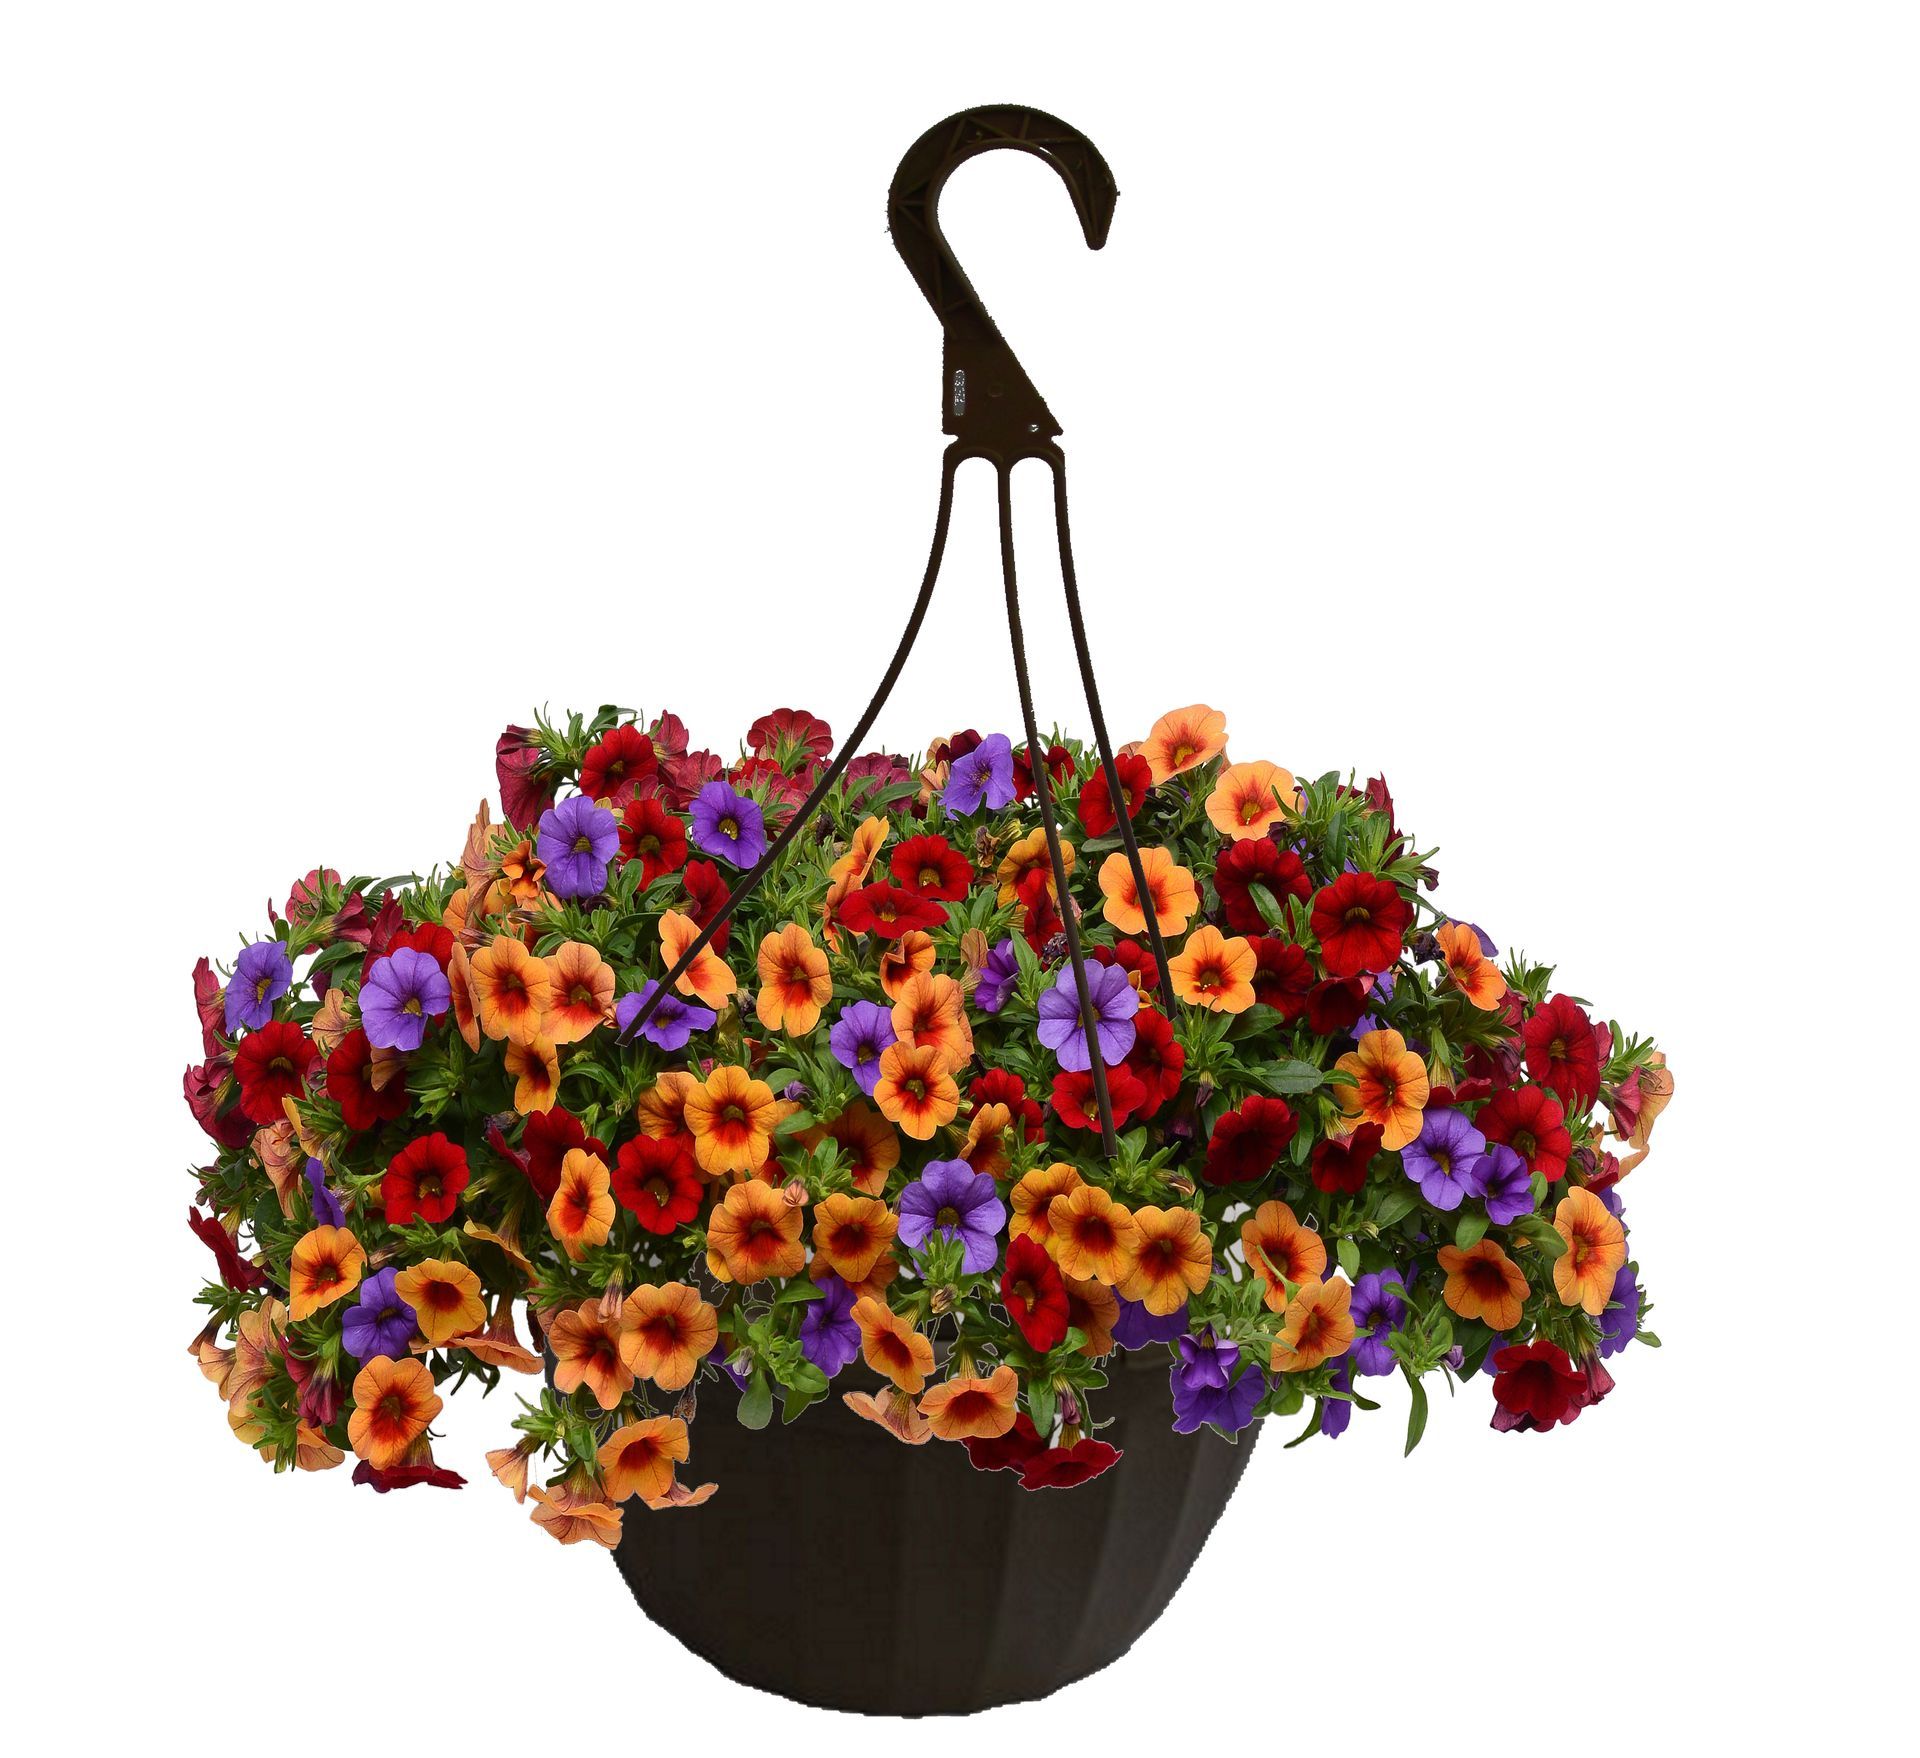 Calibrachoa Hanging Basket flowers for sale in Lebanon PA